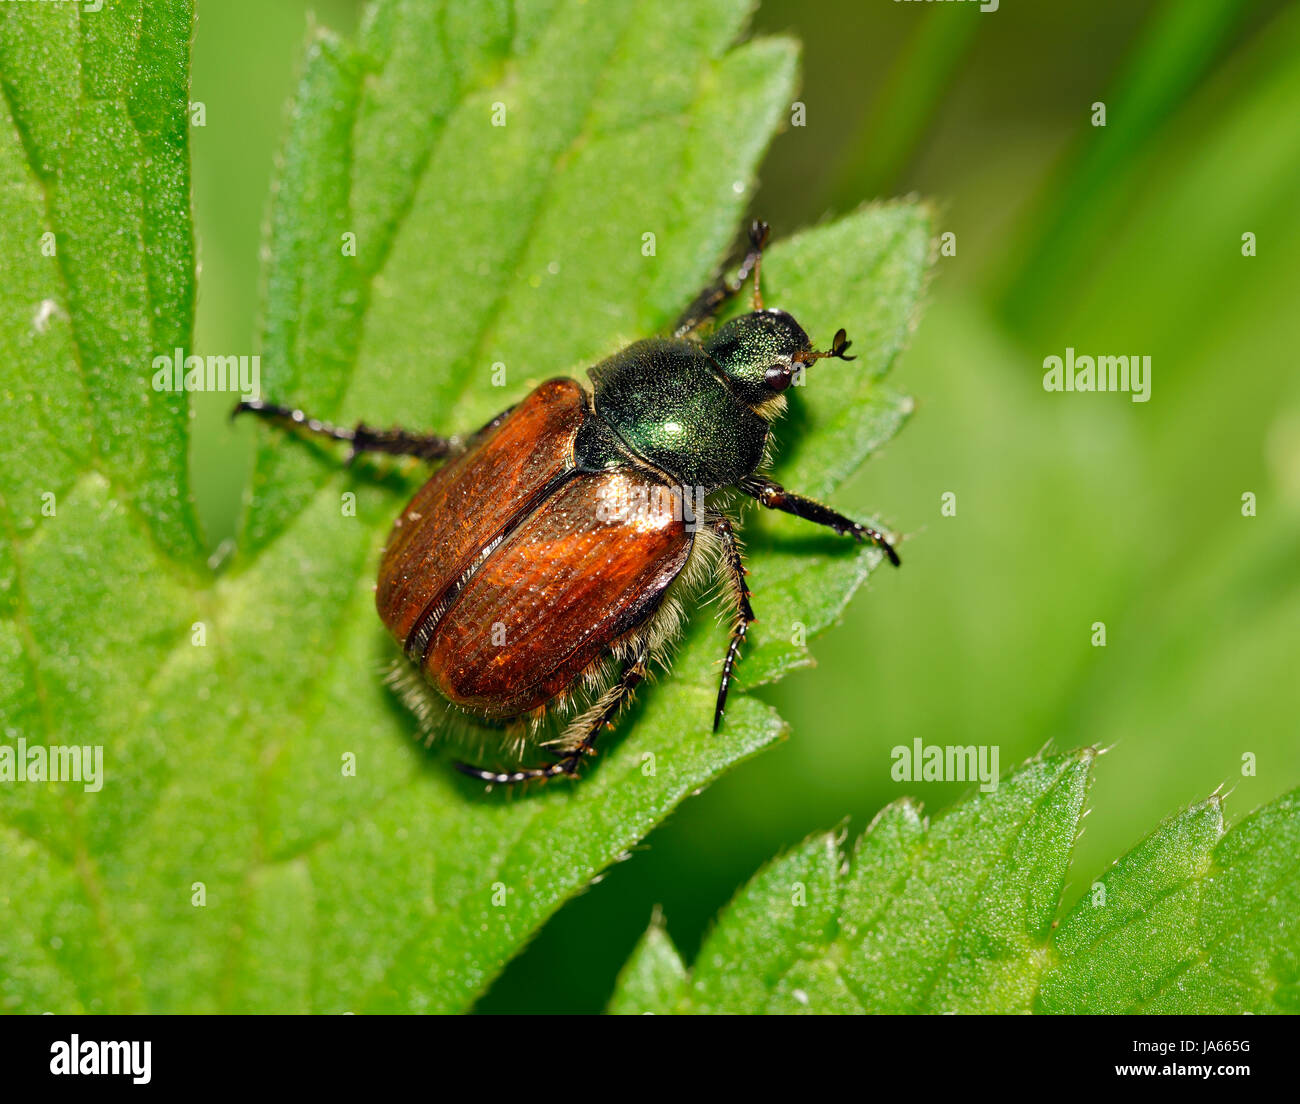 Garden Chafer Beetle - Phyllopertha horticola on leaf Stock Photo